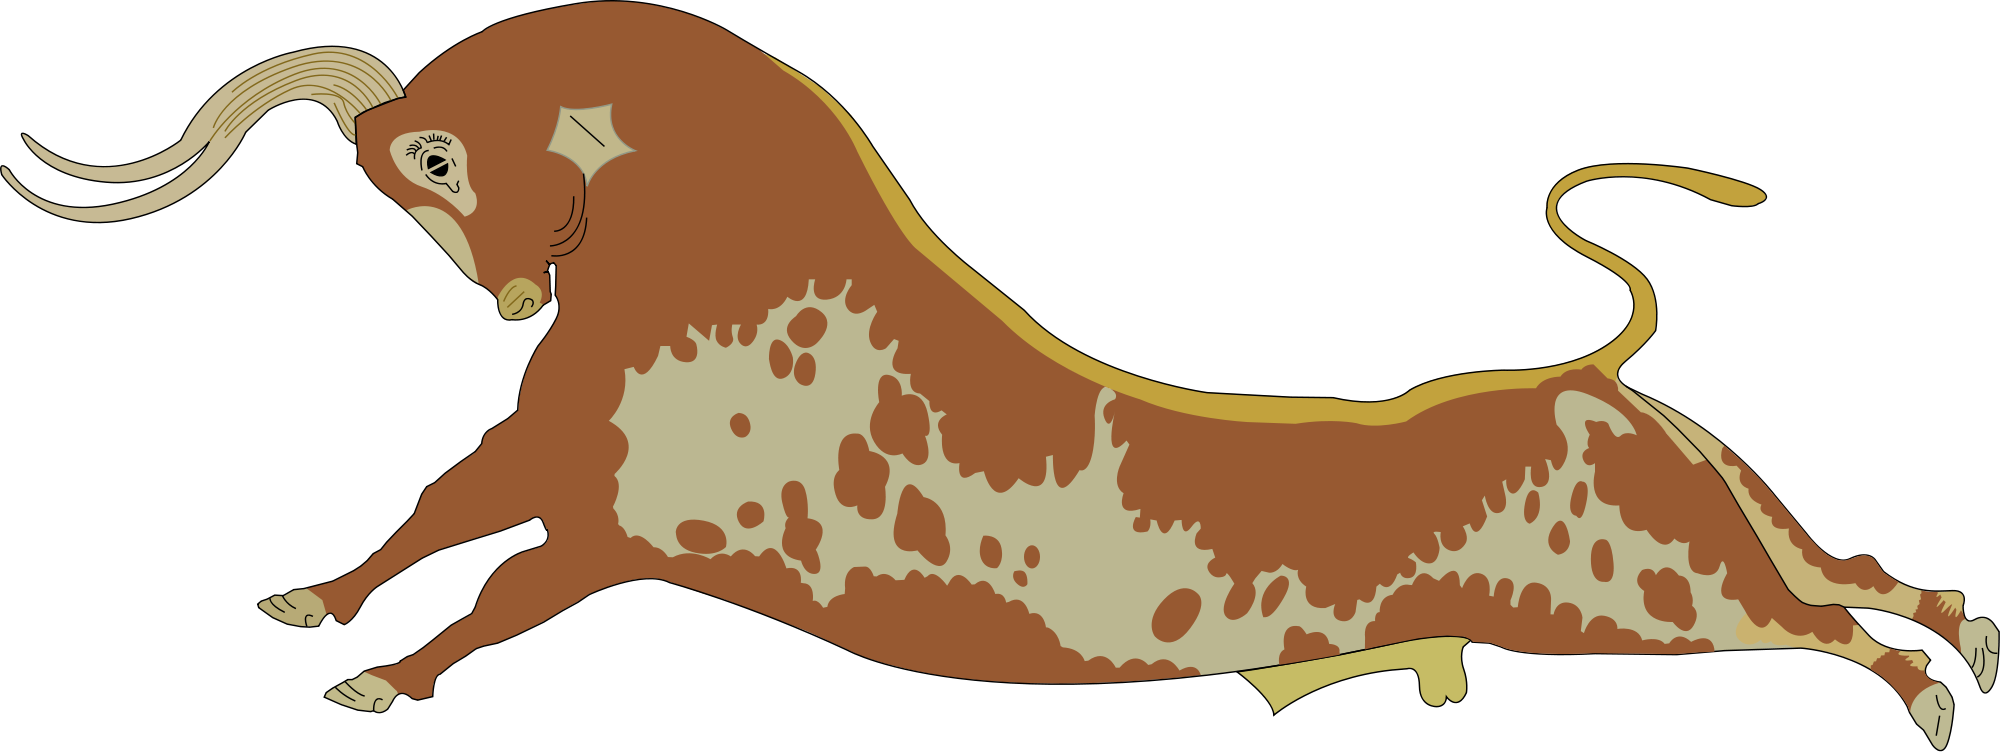 File auroch animal wikimedia. Walrus clipart svg